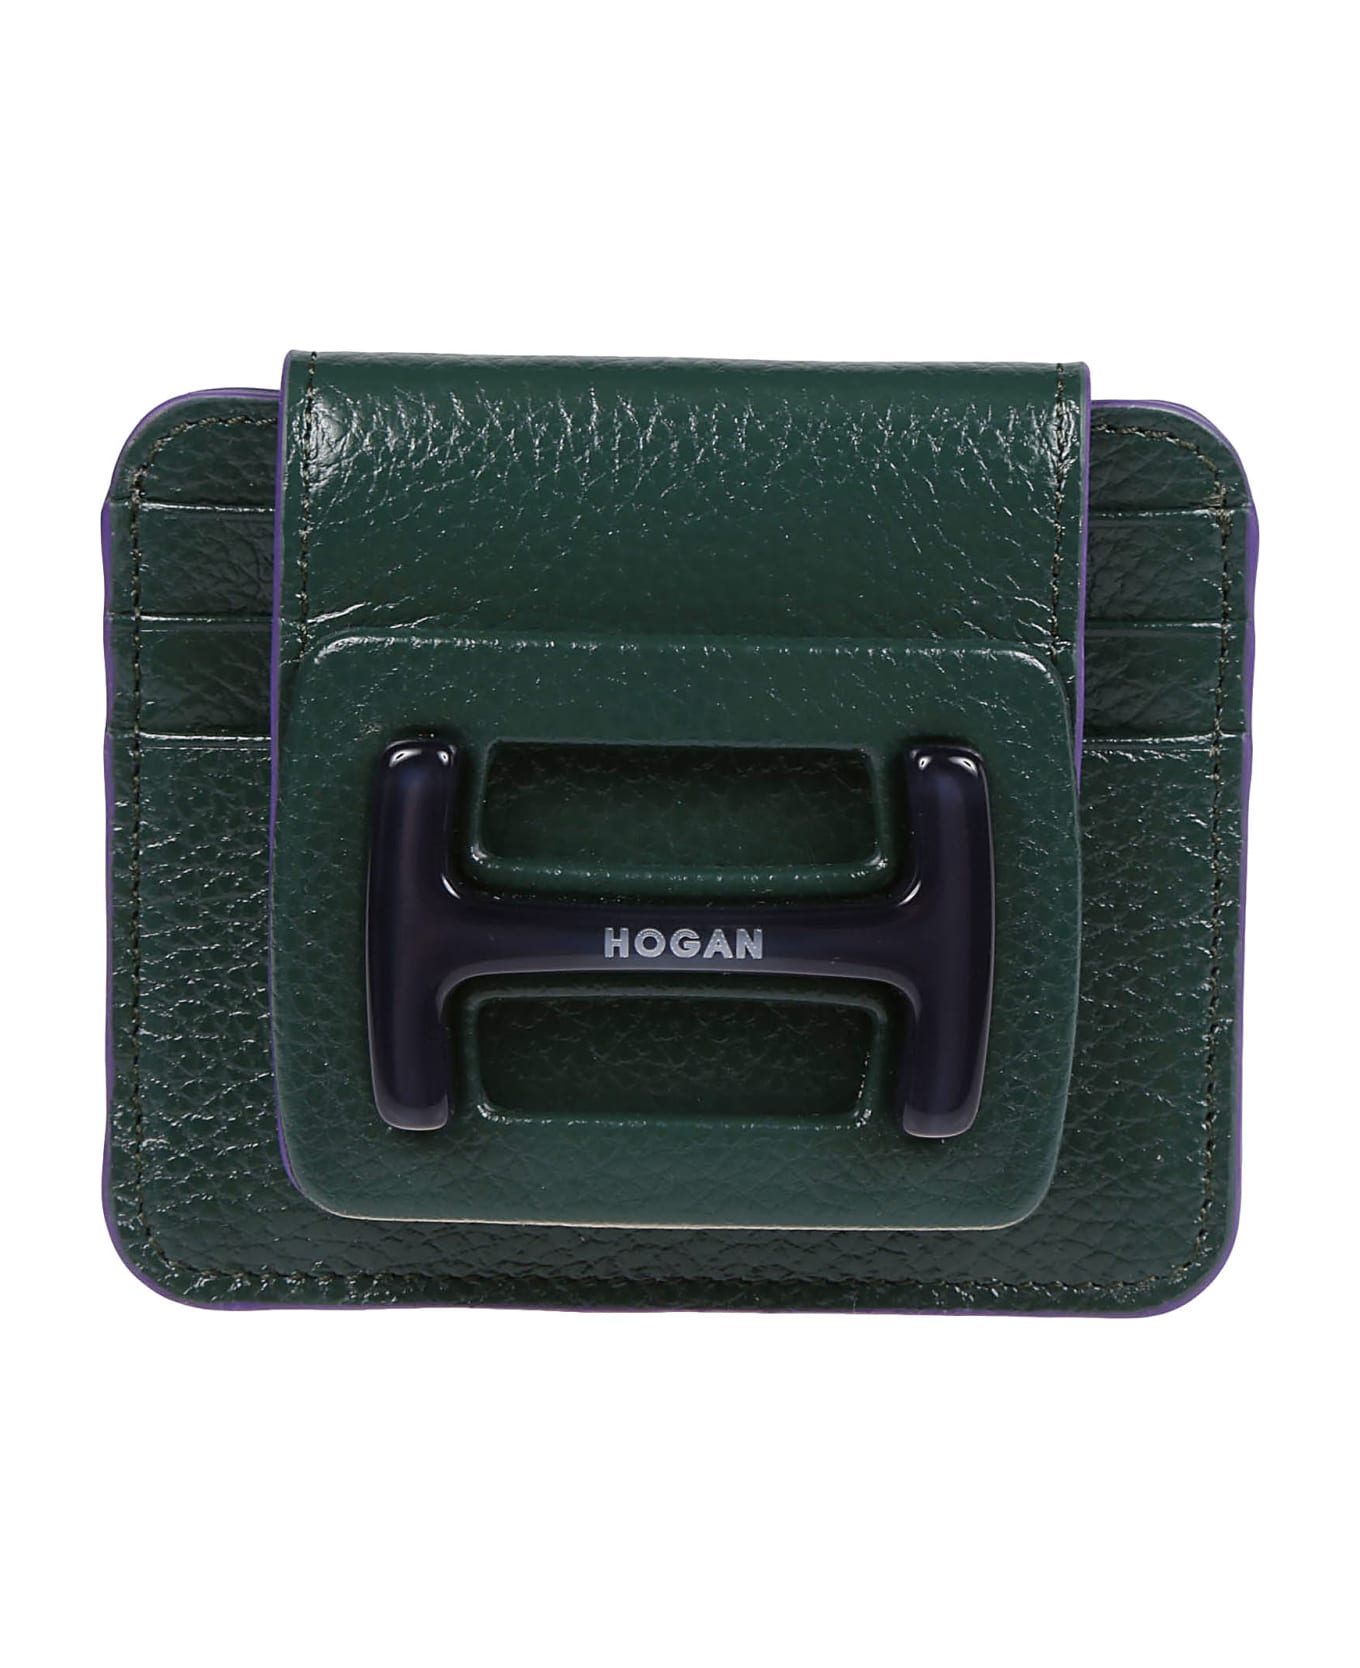 Hogan H-bag Credit Card Holder - Bottiglia/baltic Chiaro